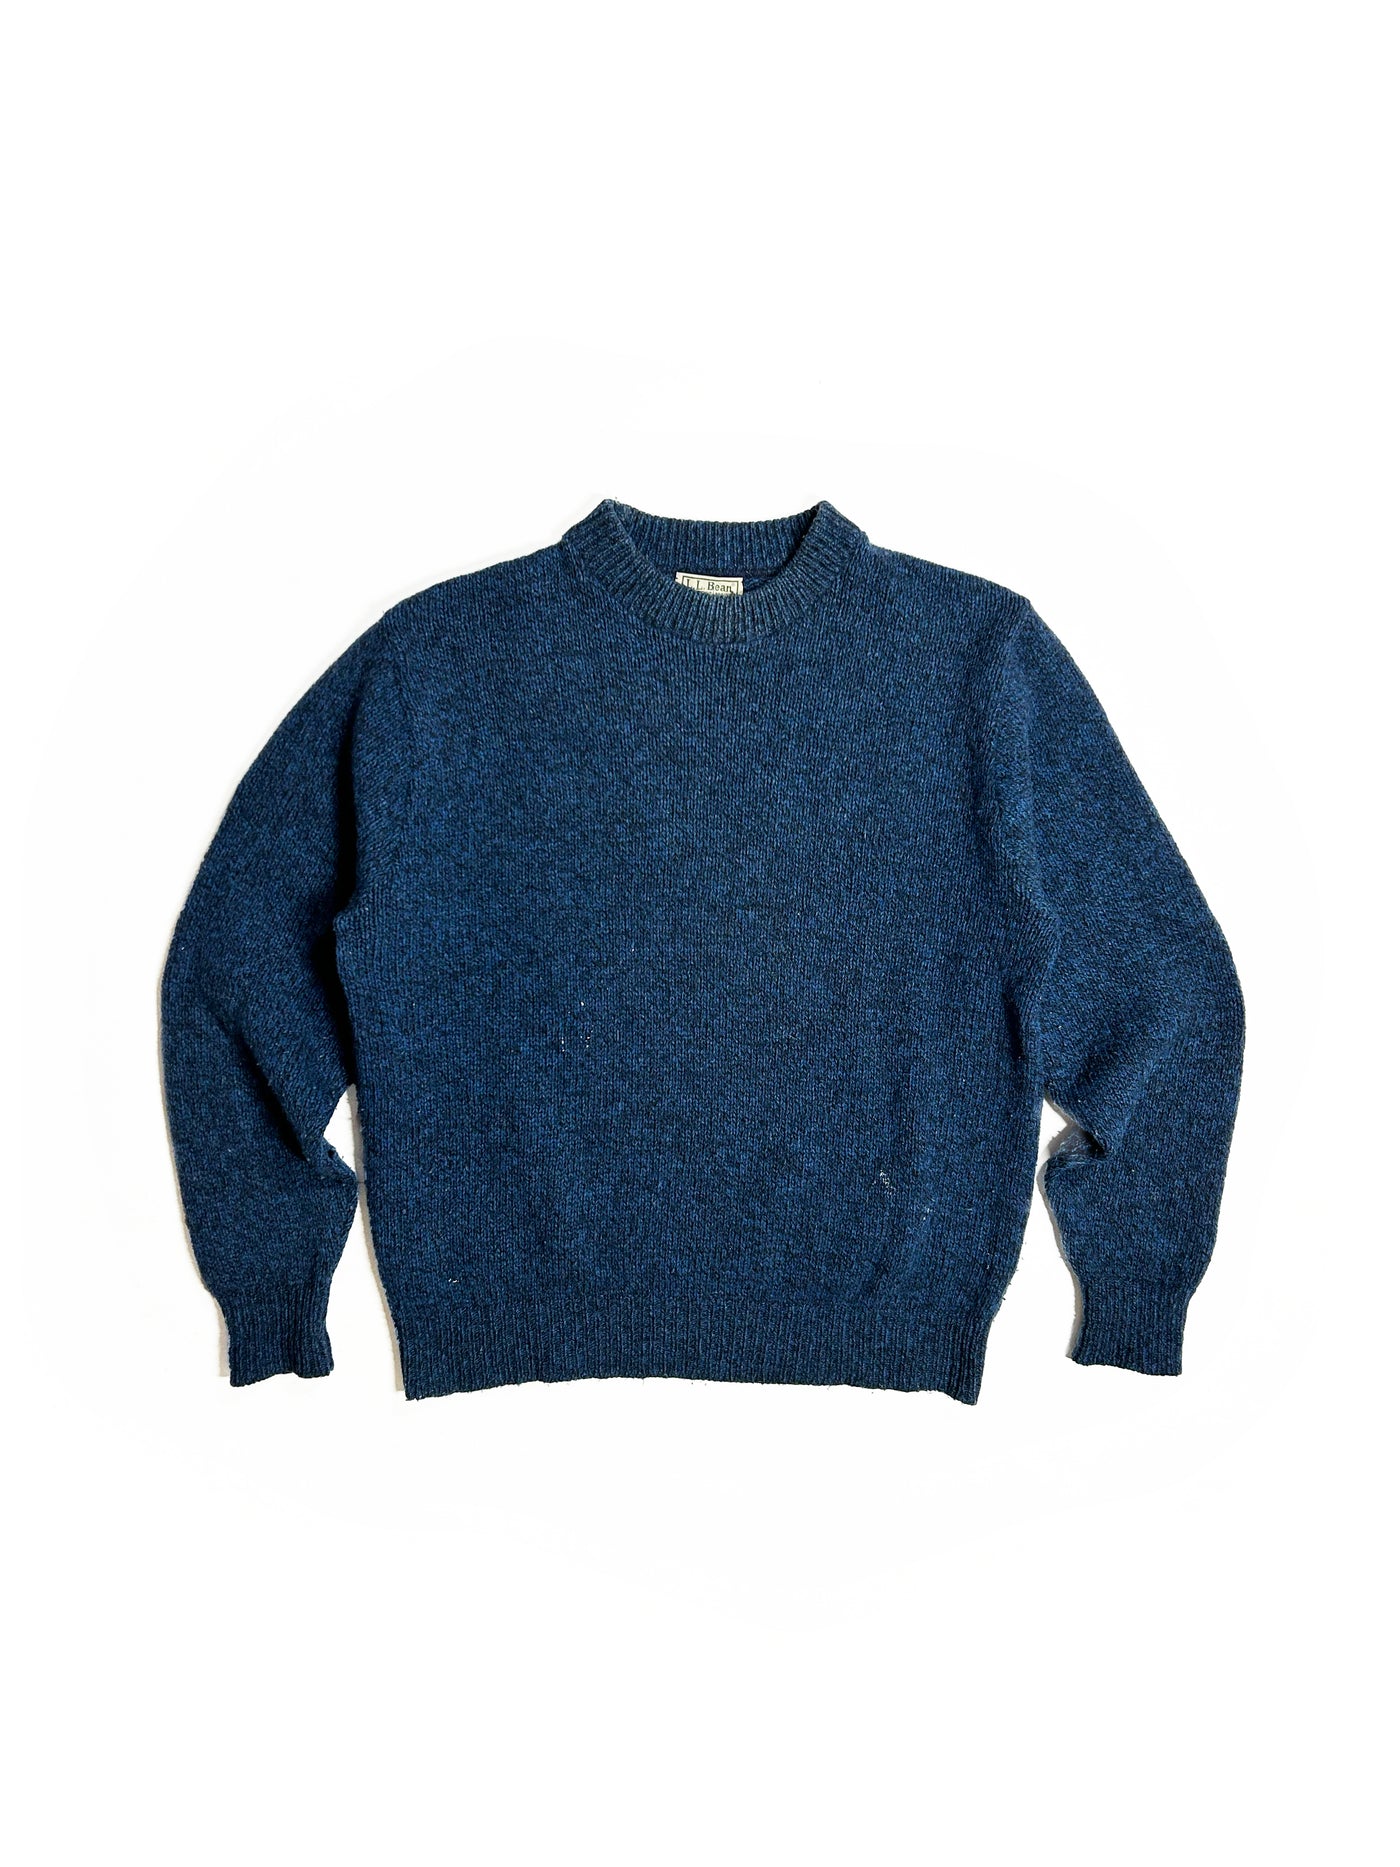 Vintage 80s LL Bean Sweater